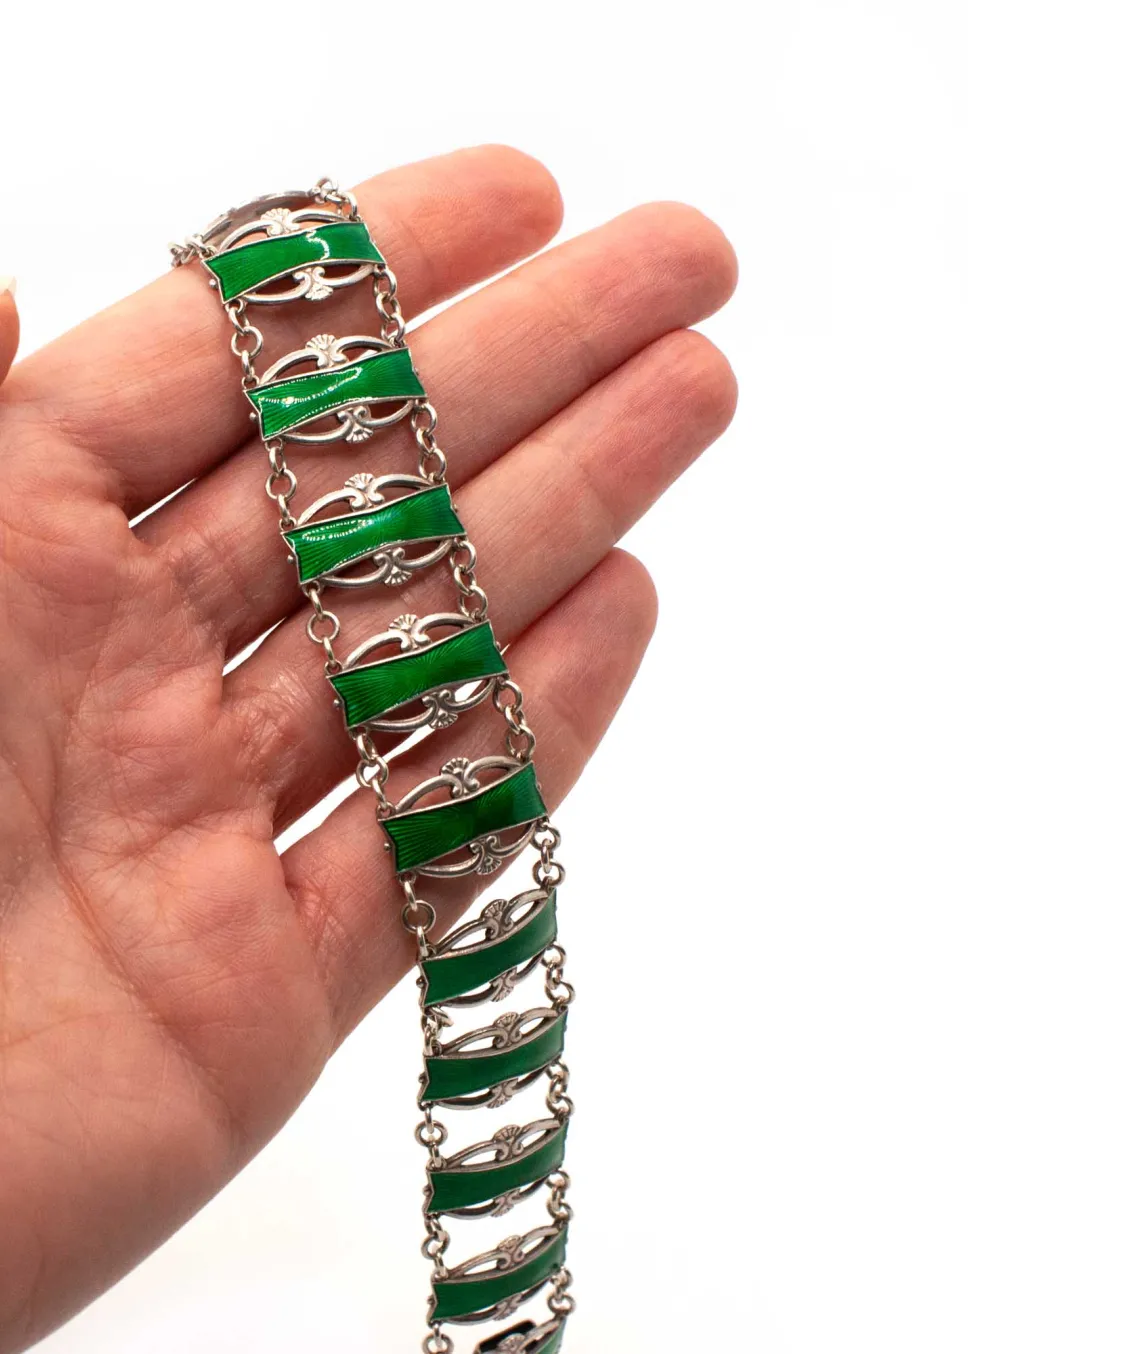 Emerald green enamel on sterling silver vintage bracelet held in hand